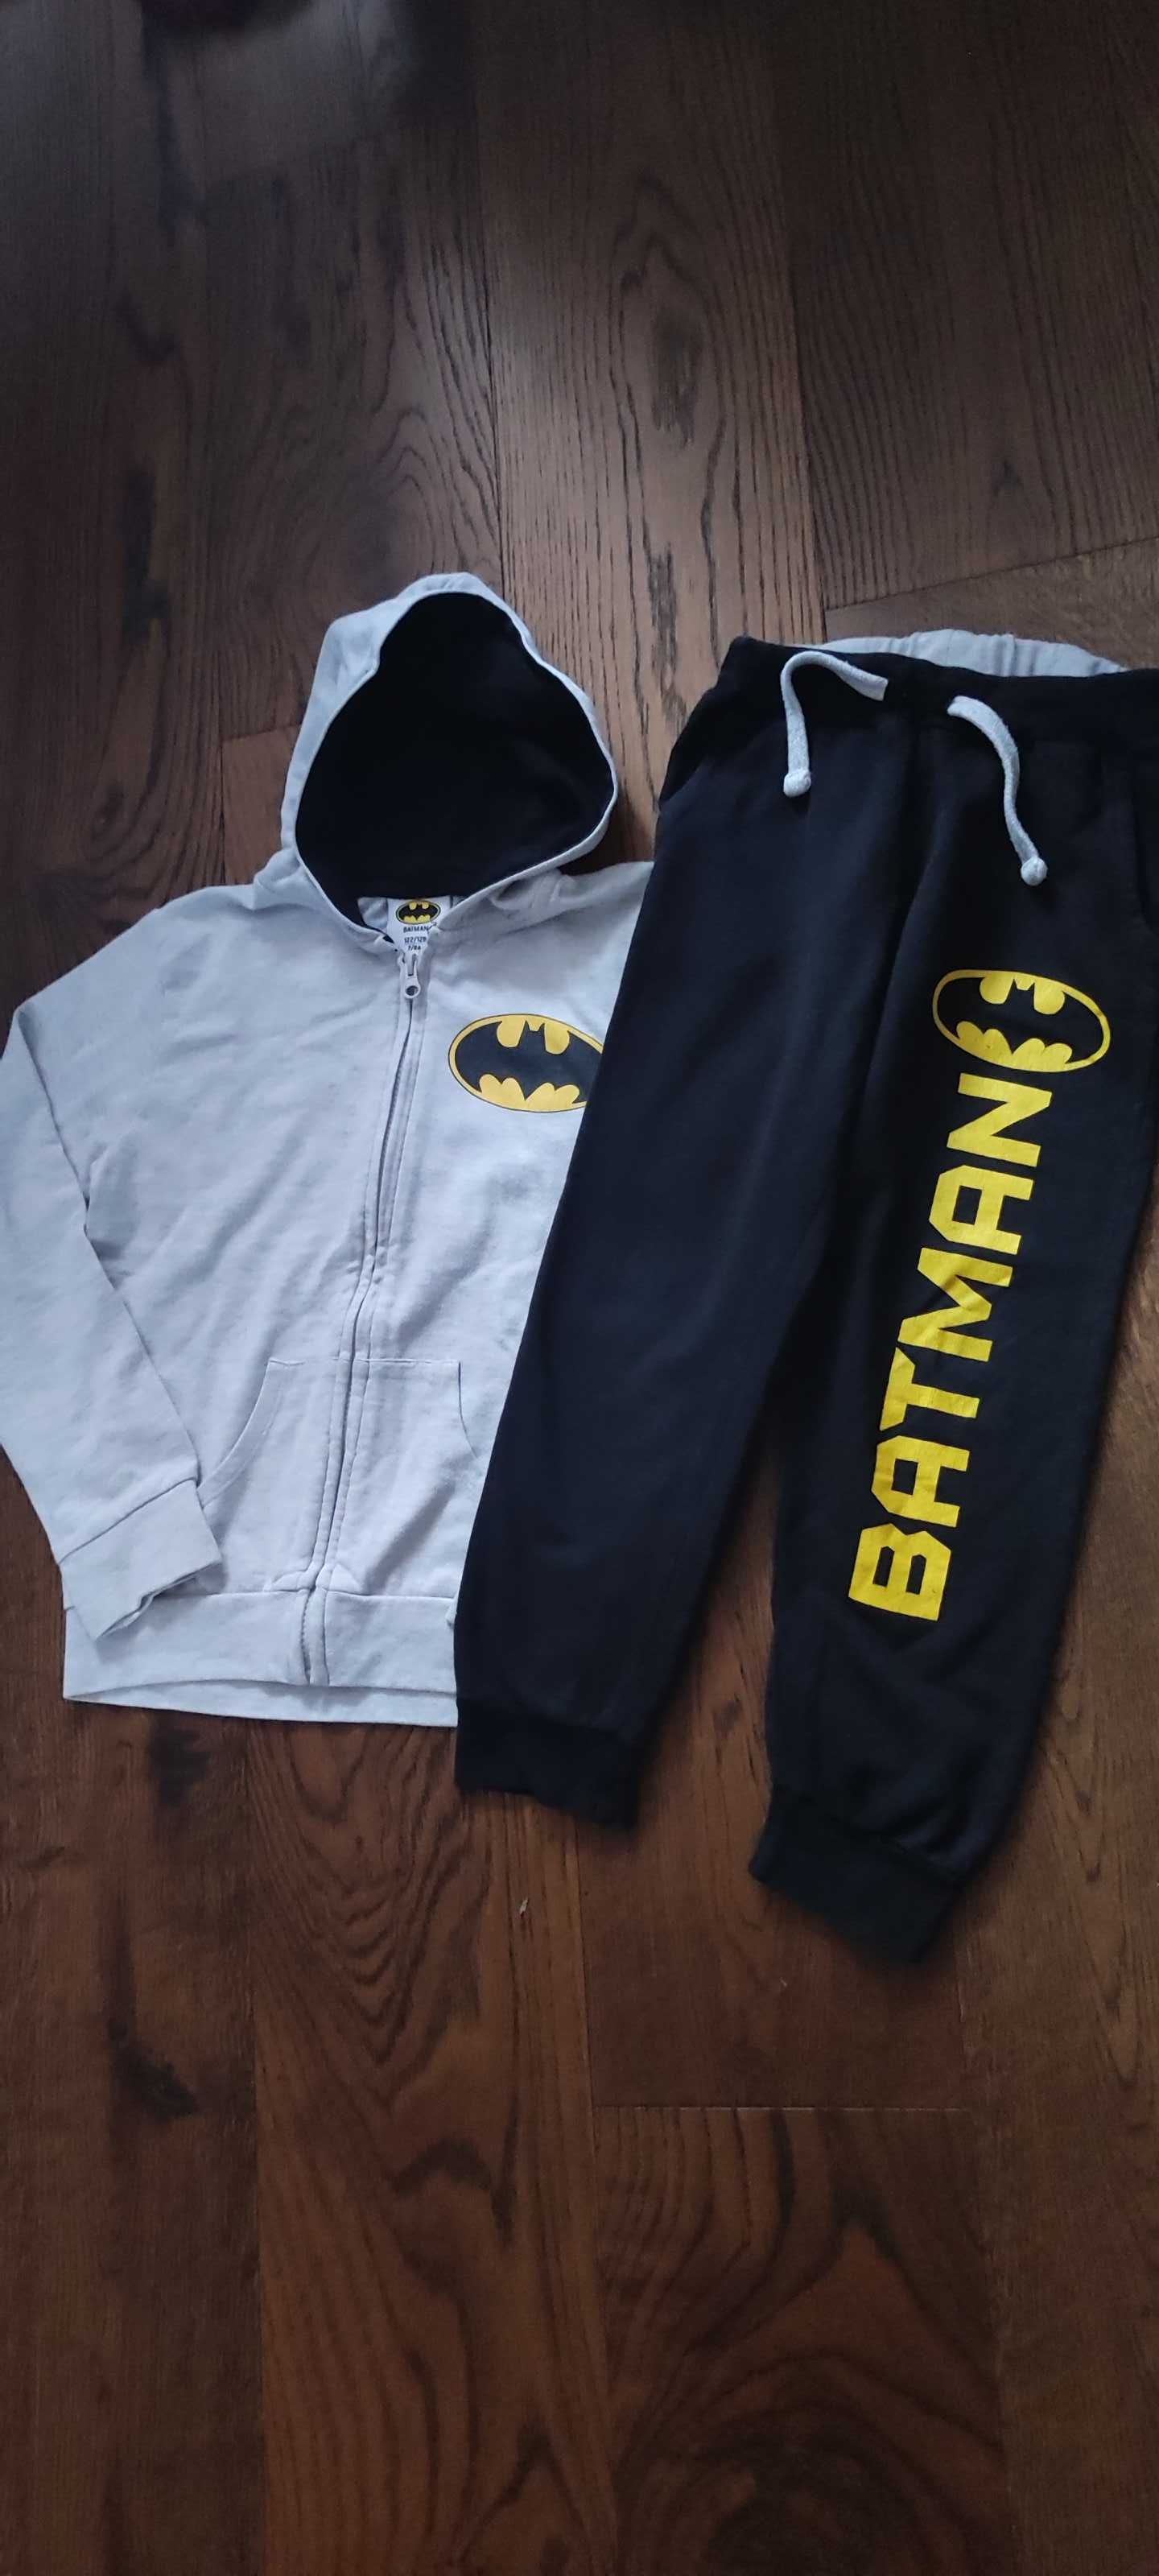 Batman dres,zestaw bluza/spodnie komplet